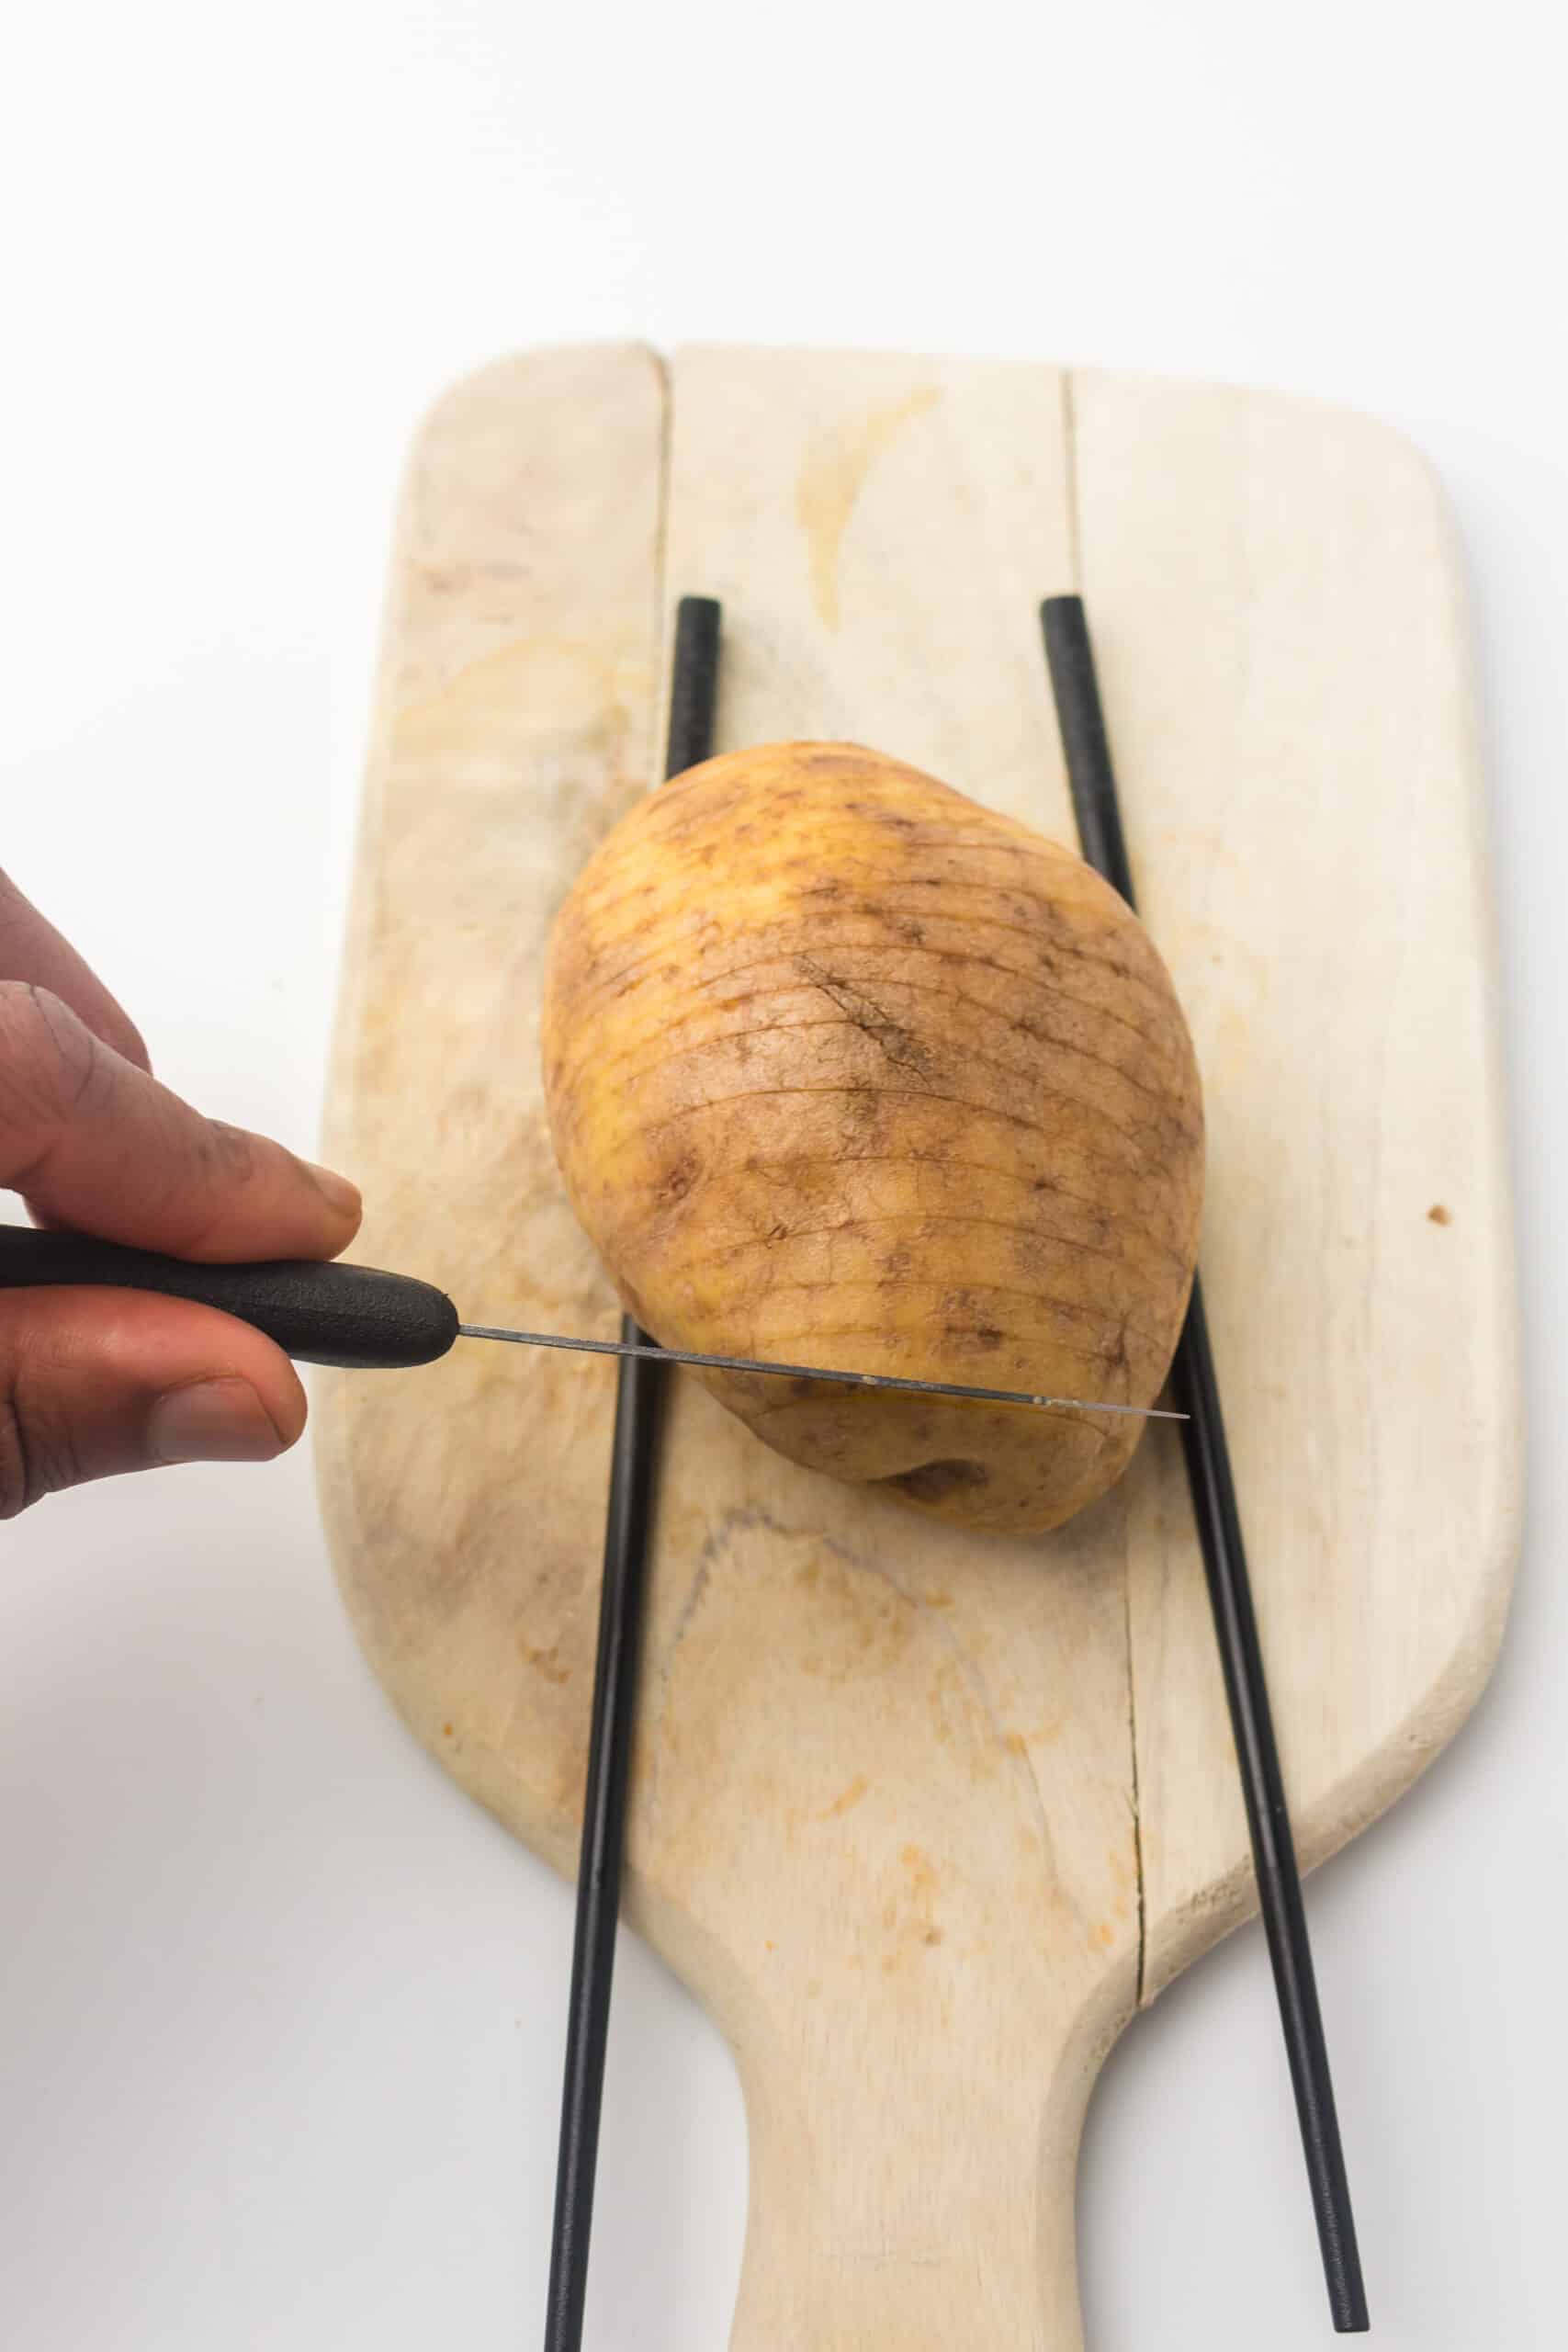 Cutting the potatoes 